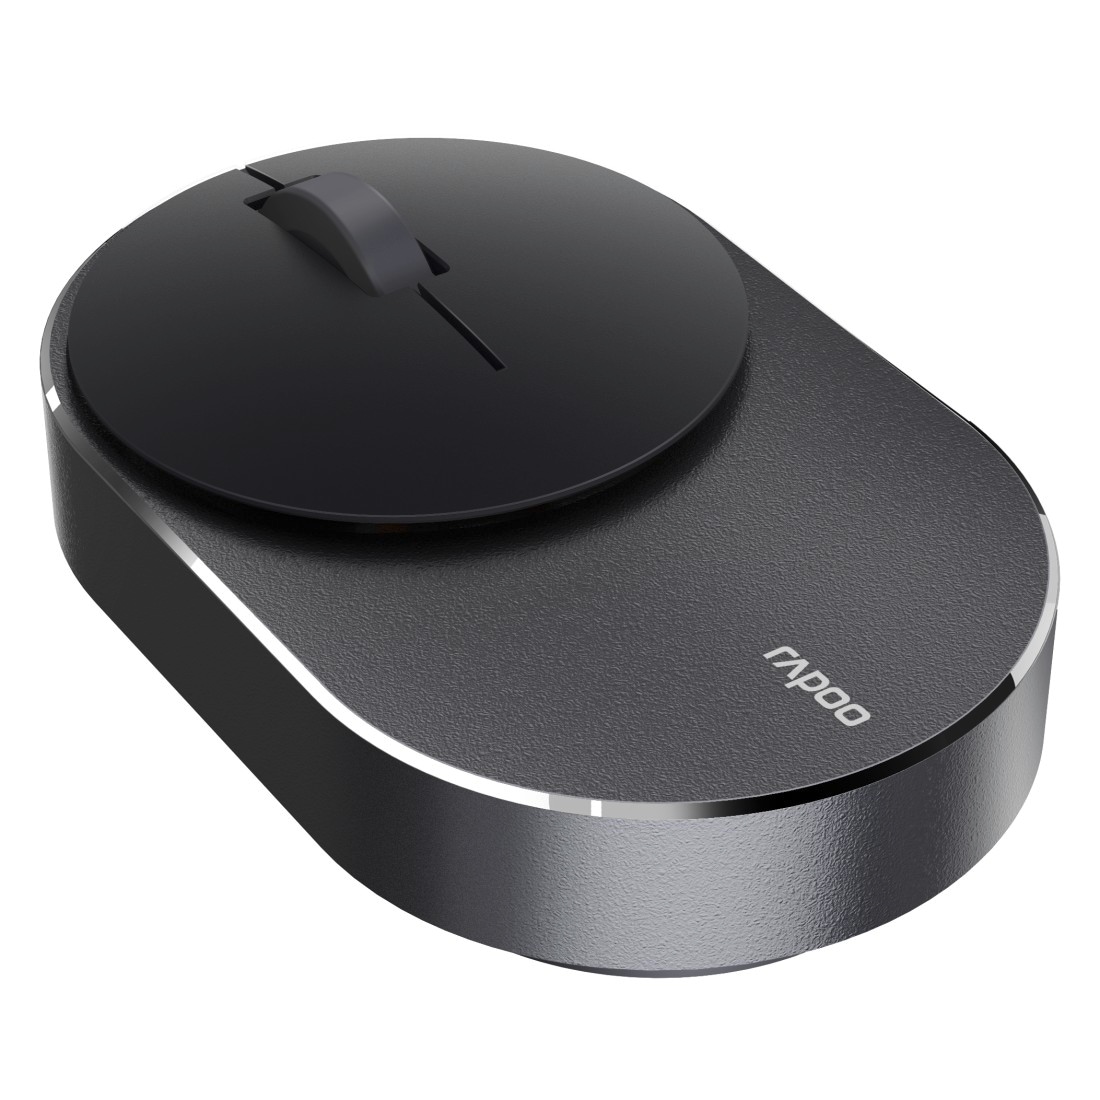 Mini Maus, »M600 kabellose Bluetooth Silent bei Rapoo 1300 OTTO GHz, Maus DPI«, Bluetooth, kaufen jetzt 2.4